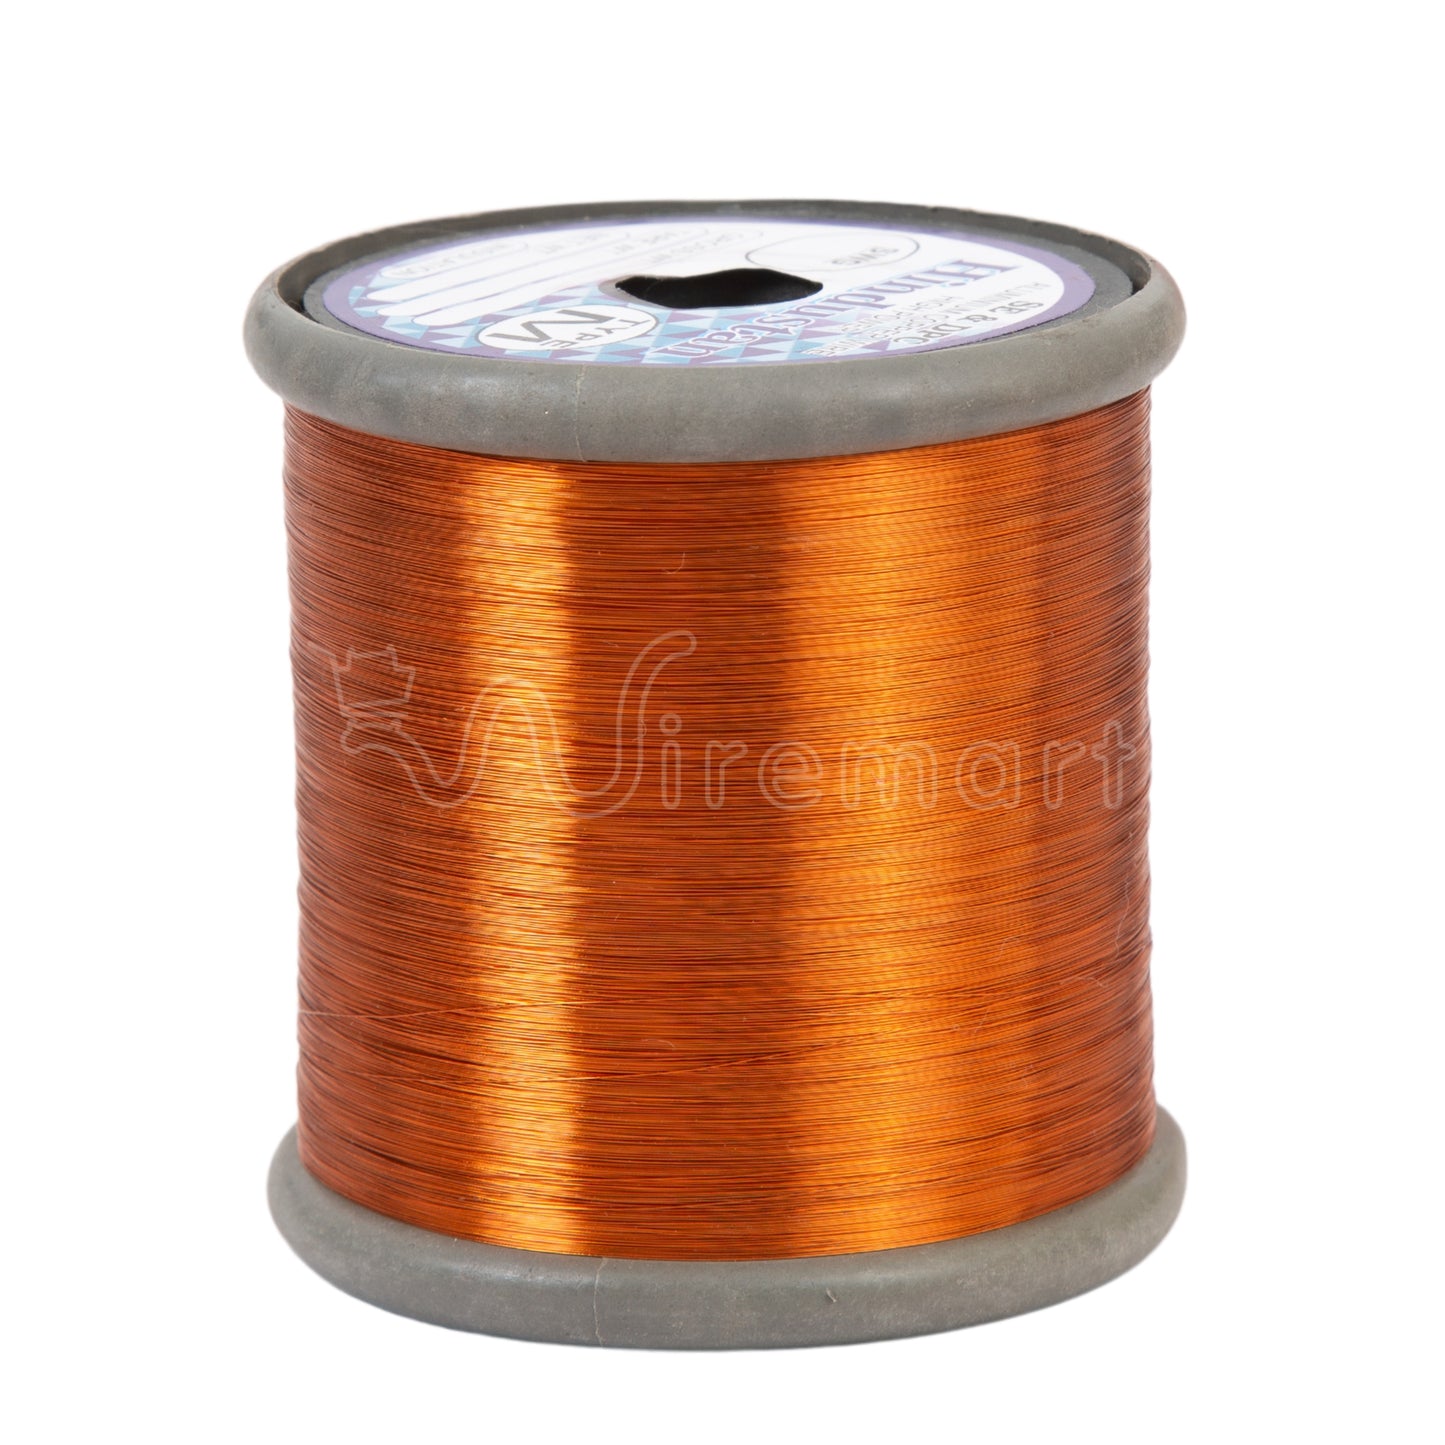 1 Kg Reel Copper Winding Wires - Hindustan Hi Power Brand